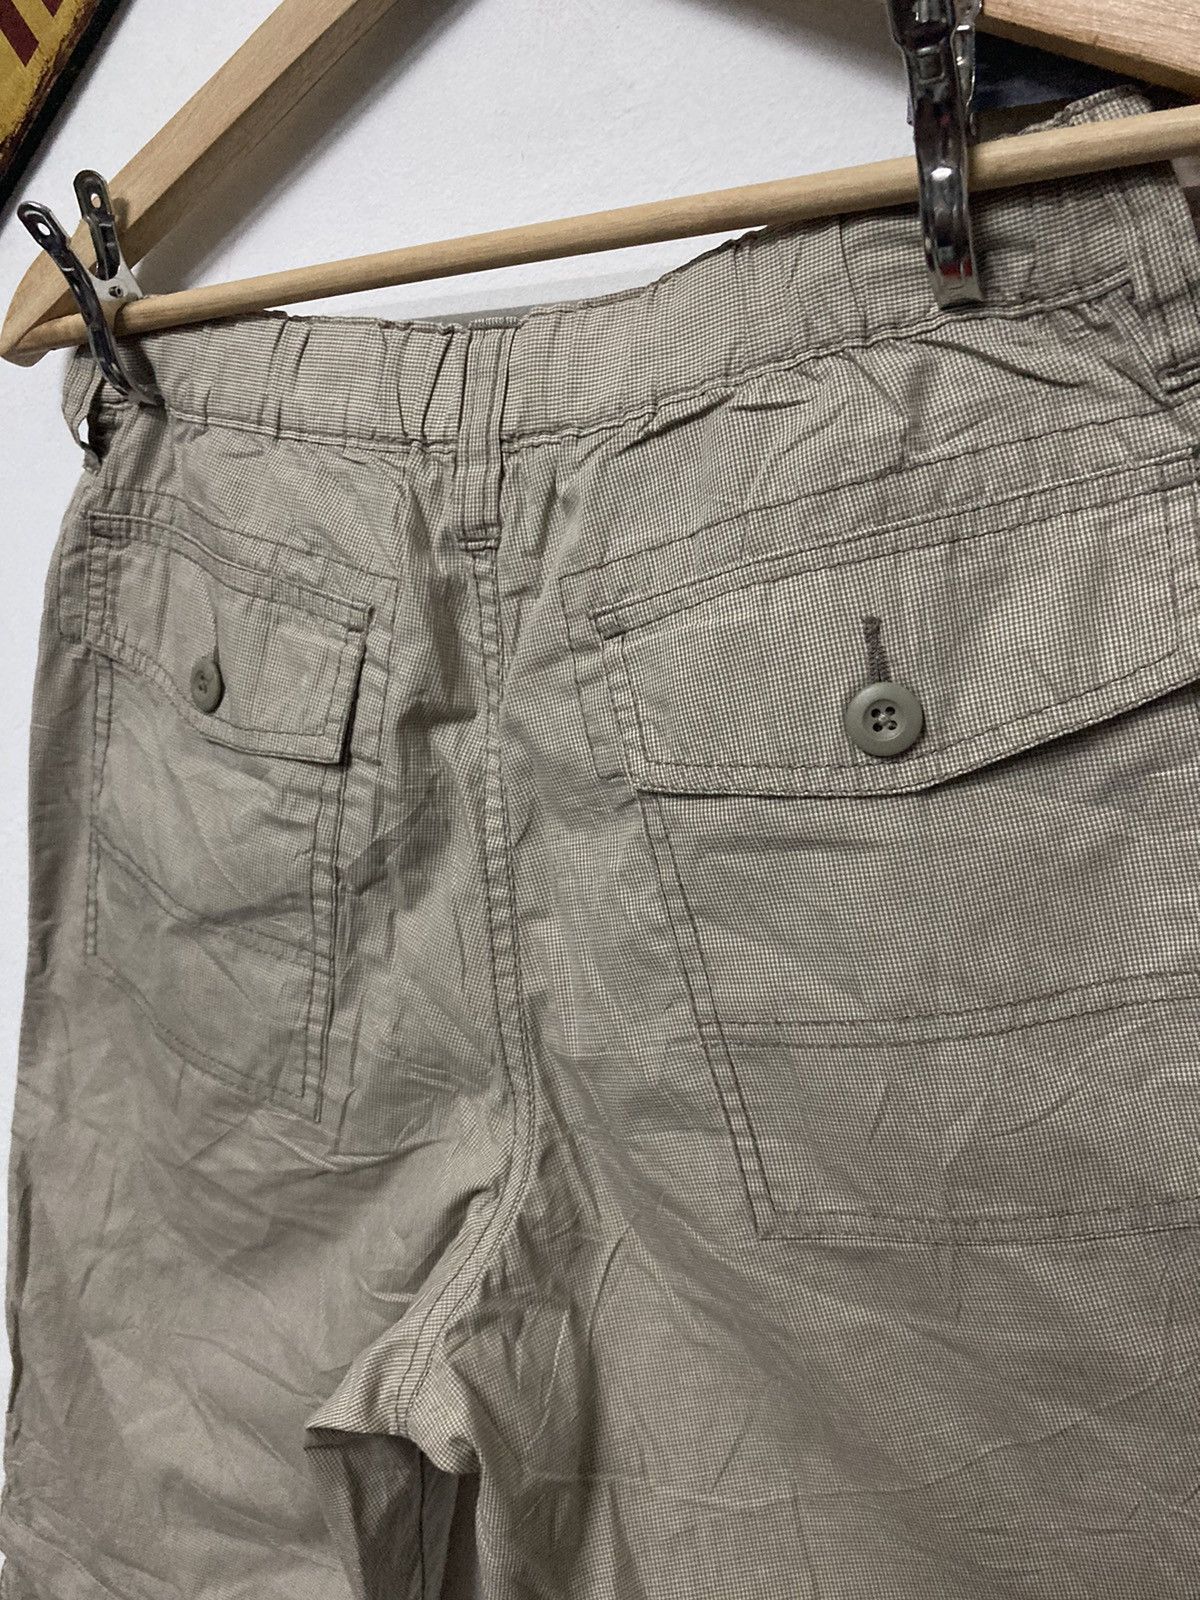 Vintage Uniqlo 3 Quarter Drawstring Pant Size Up to 32 - 12